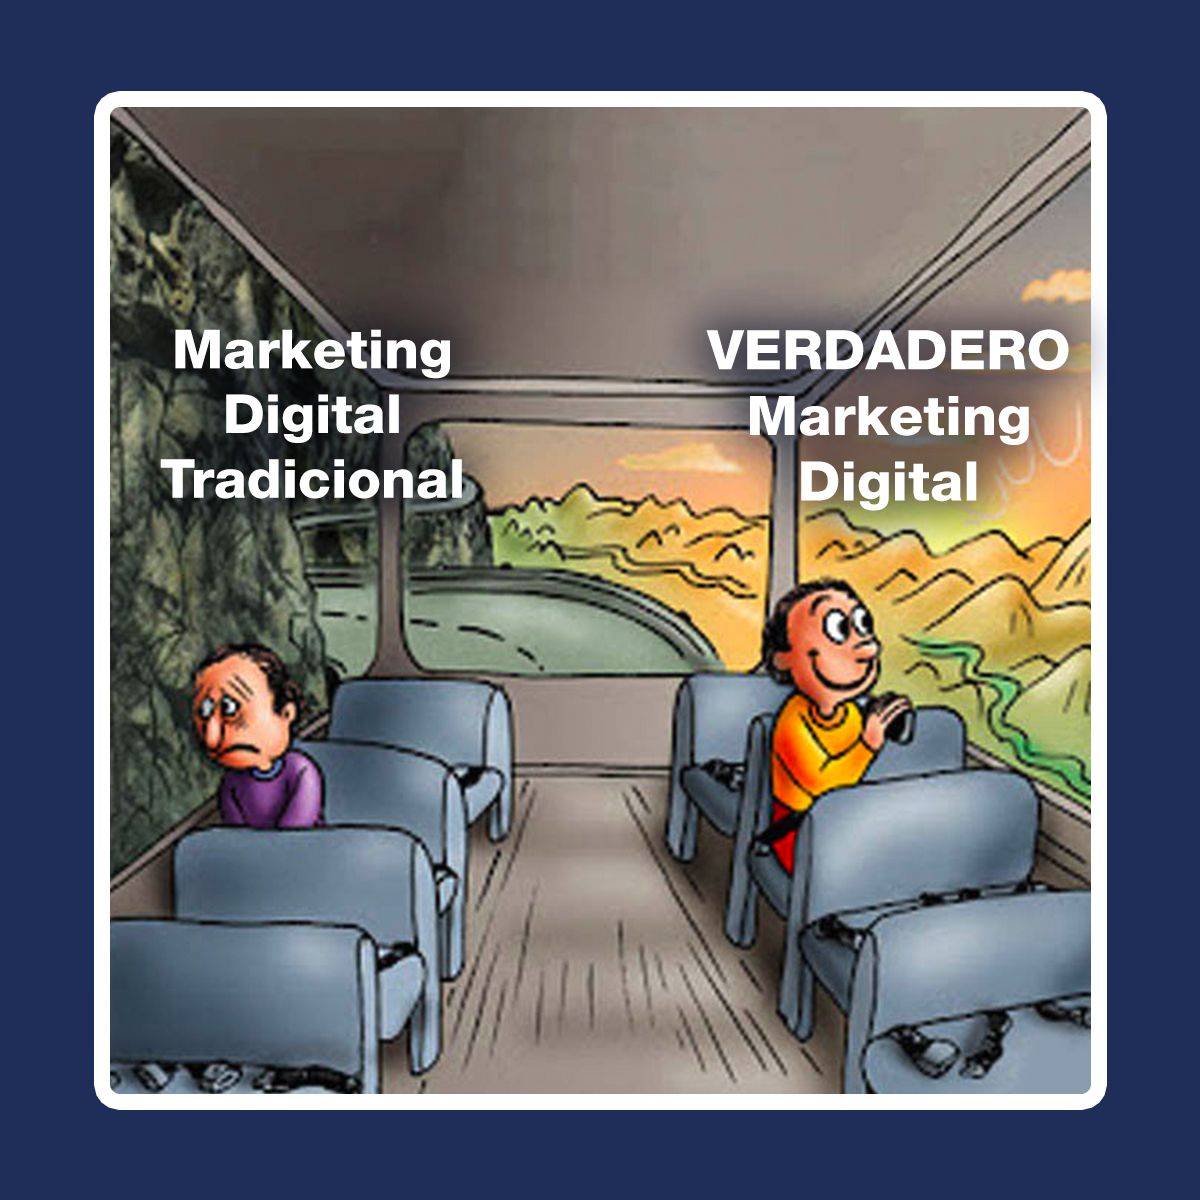 Marketing Digital Tradicional Vs. Verdadero Marketing Digital